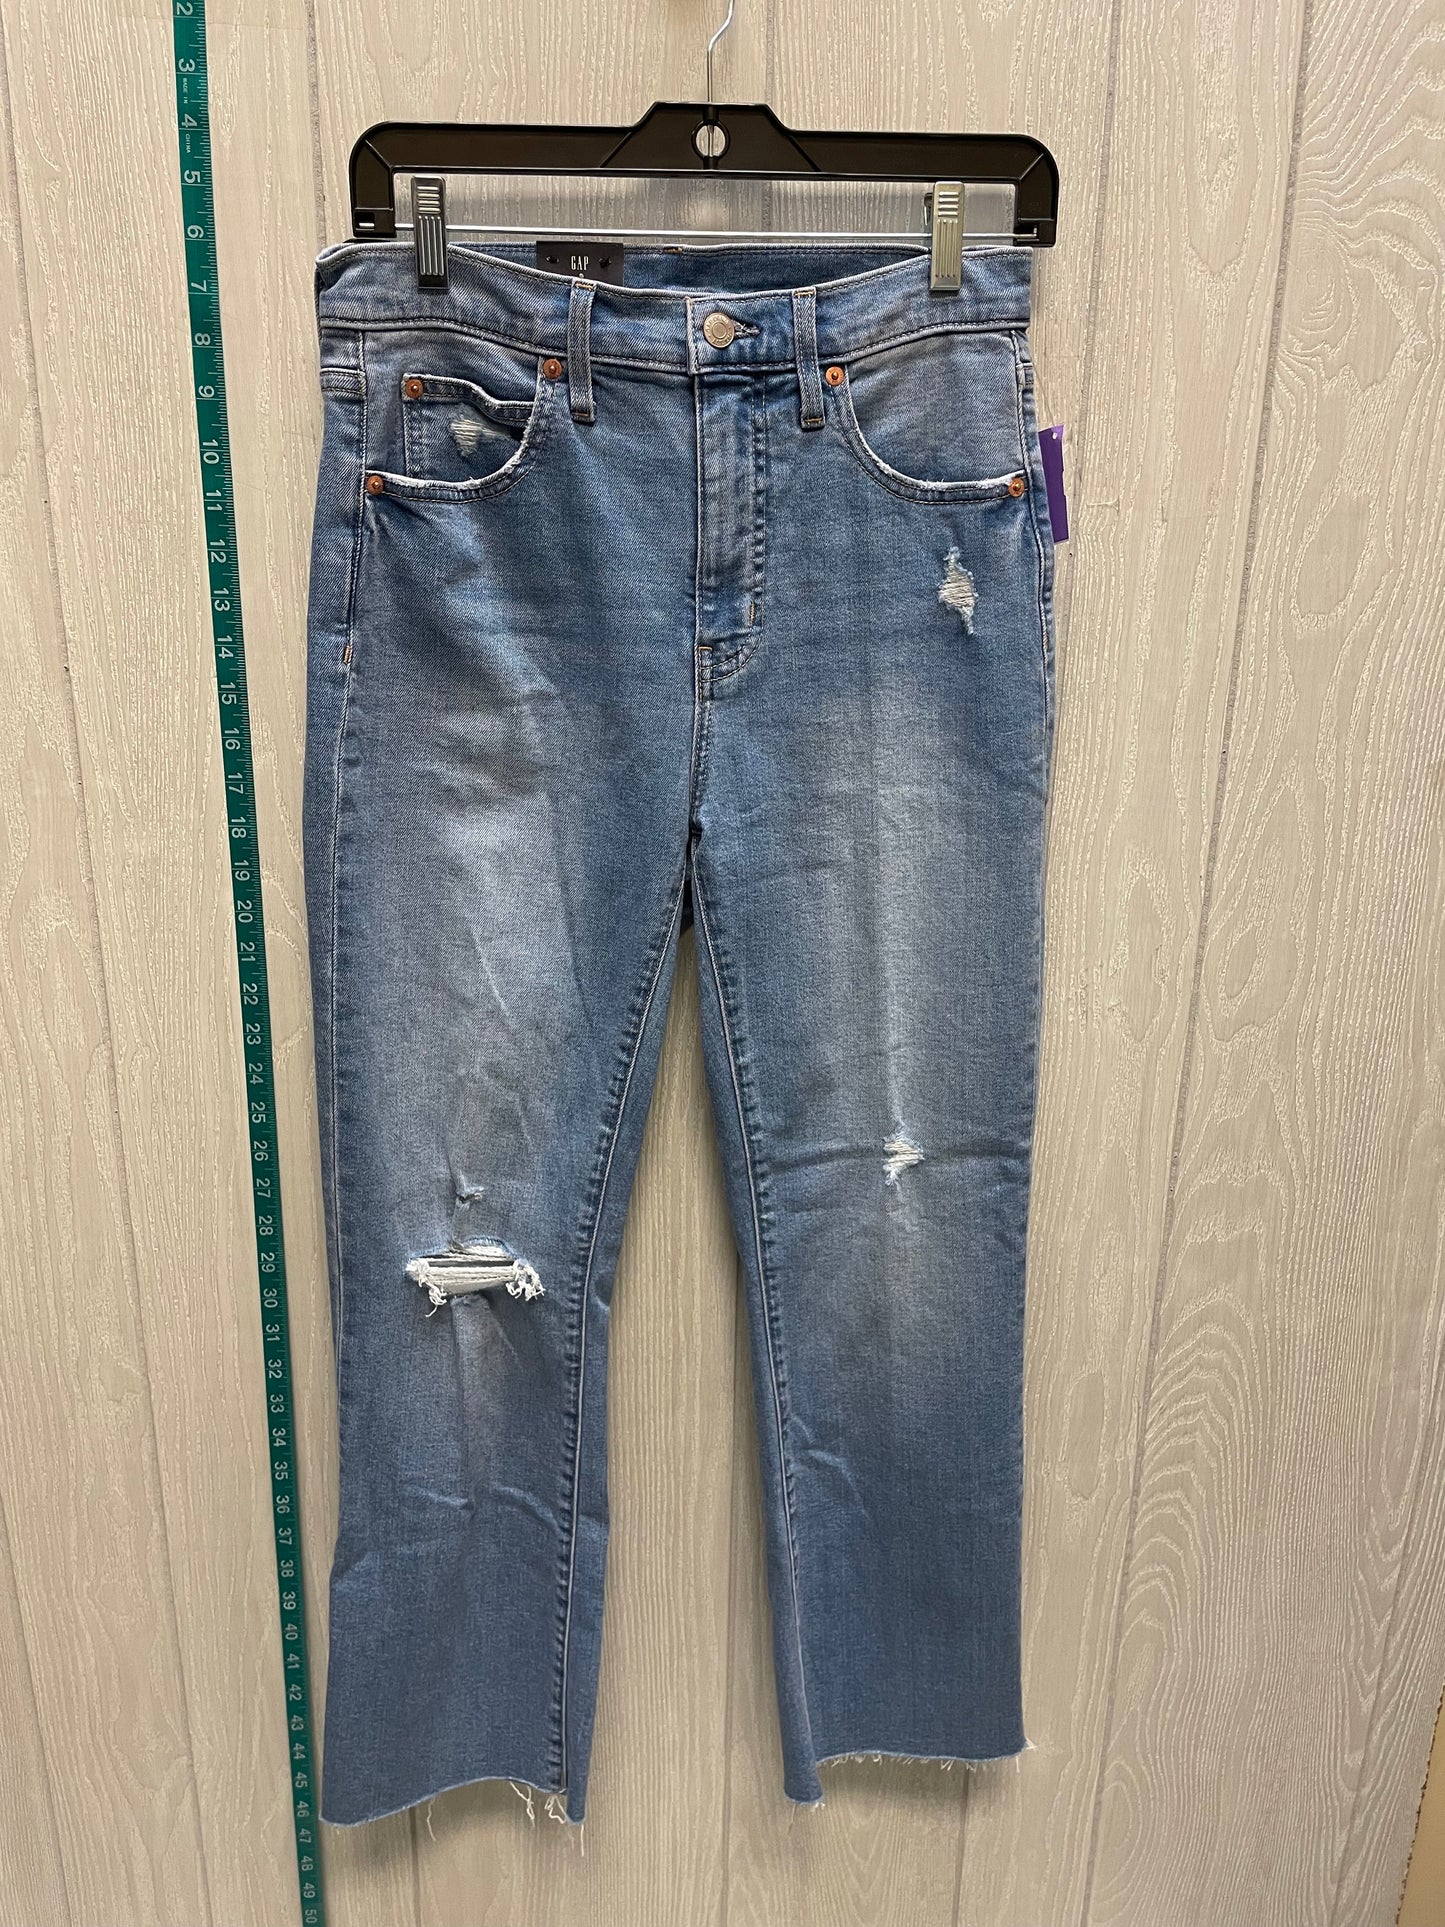 Blue Denim Jeans Flared Gap, Size 4